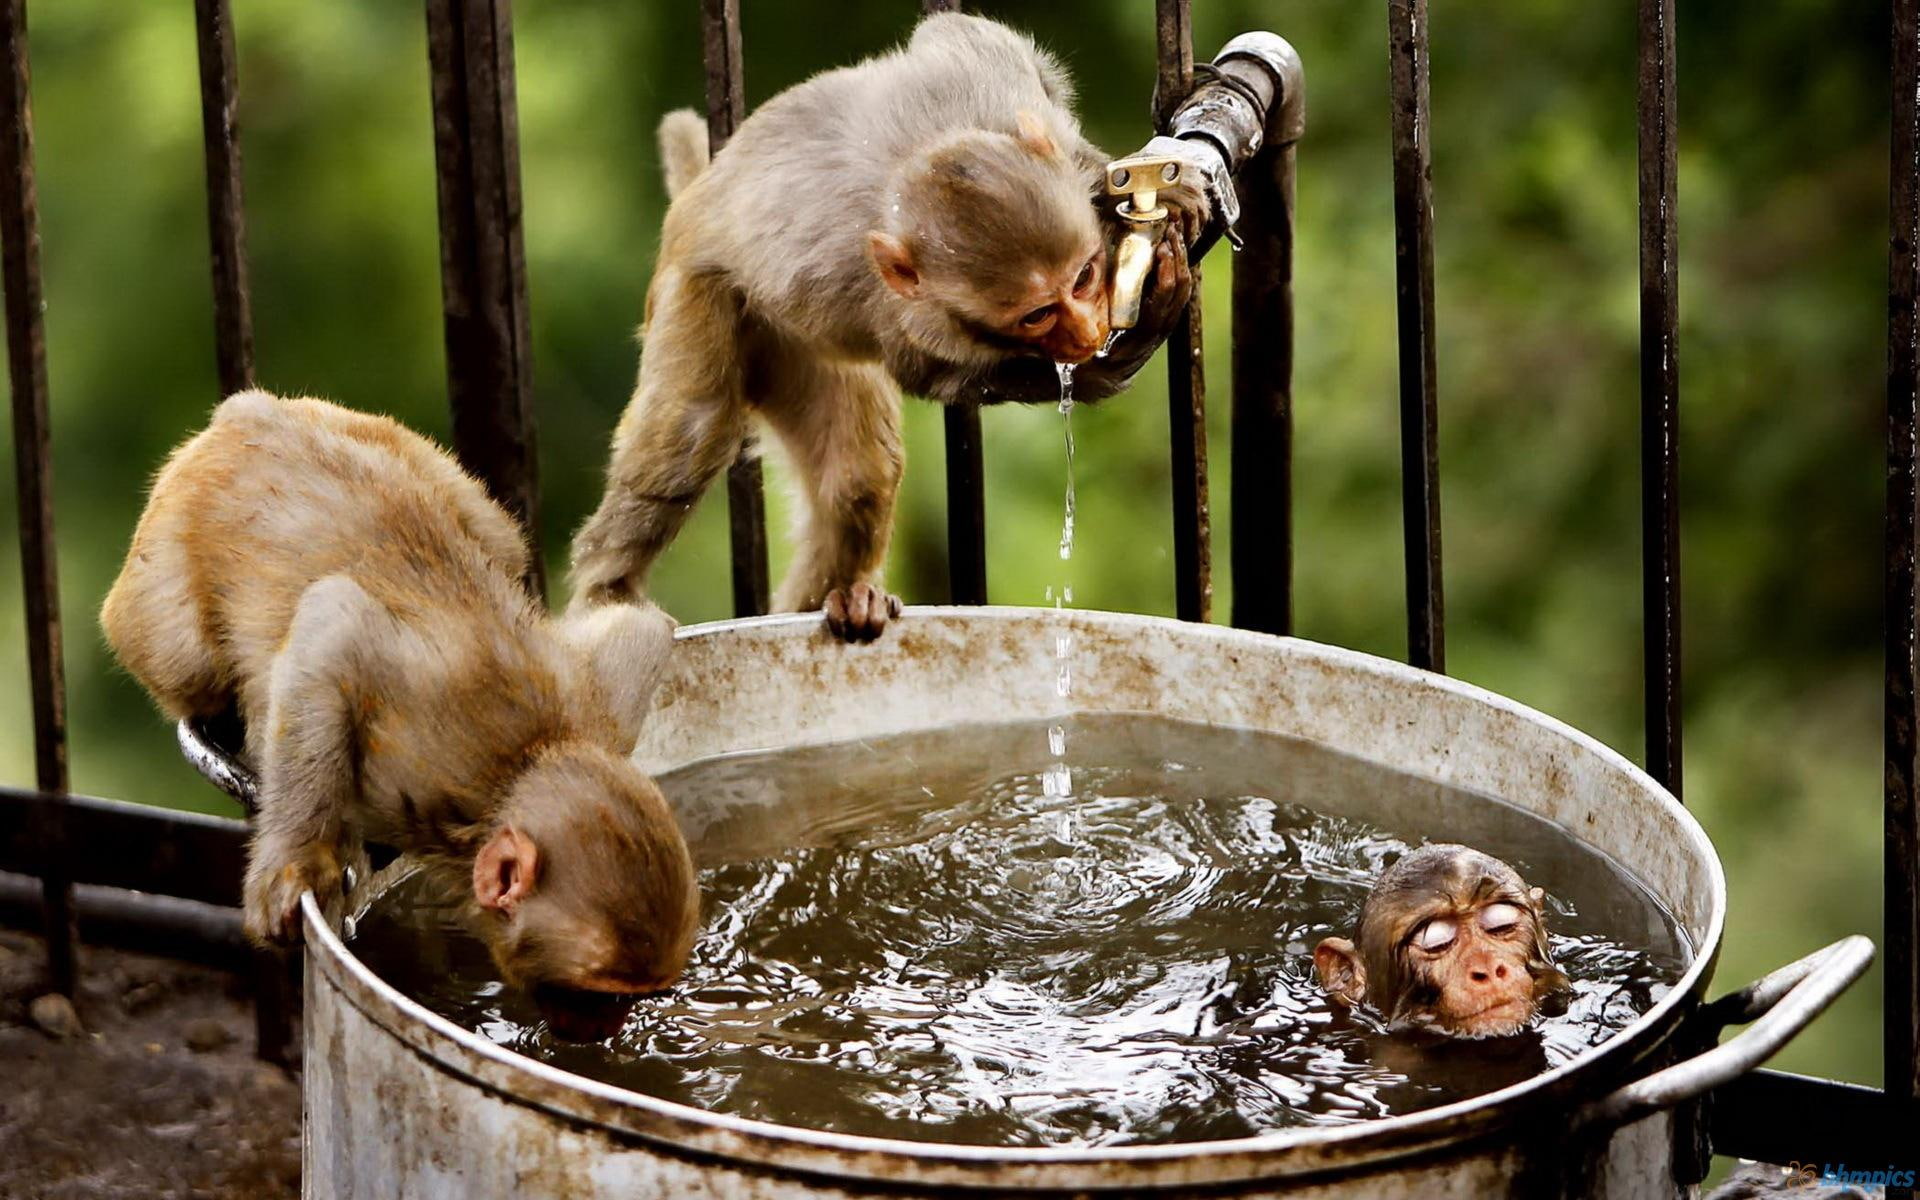 Monkeys In The Water, three brown monkeys, primates, animals